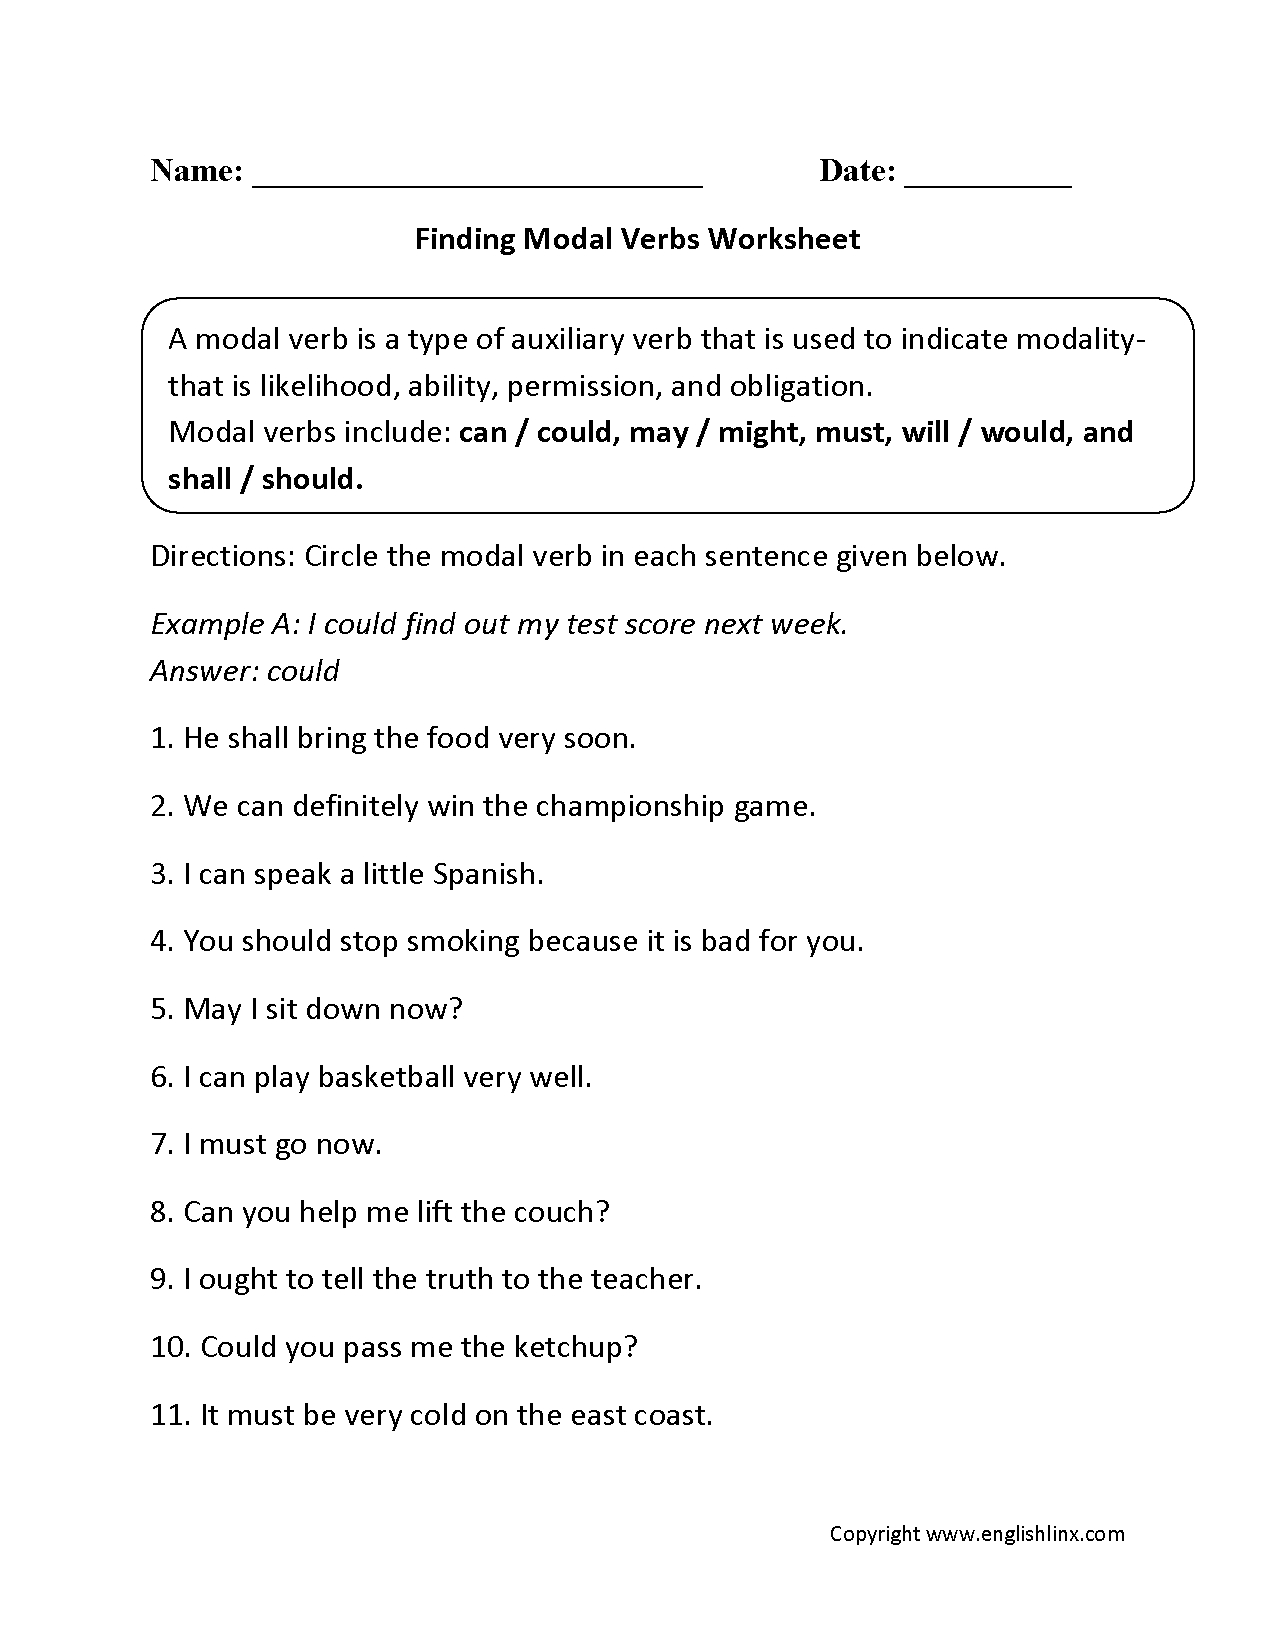 modal-verbs-ks2-worksheet-db-excel